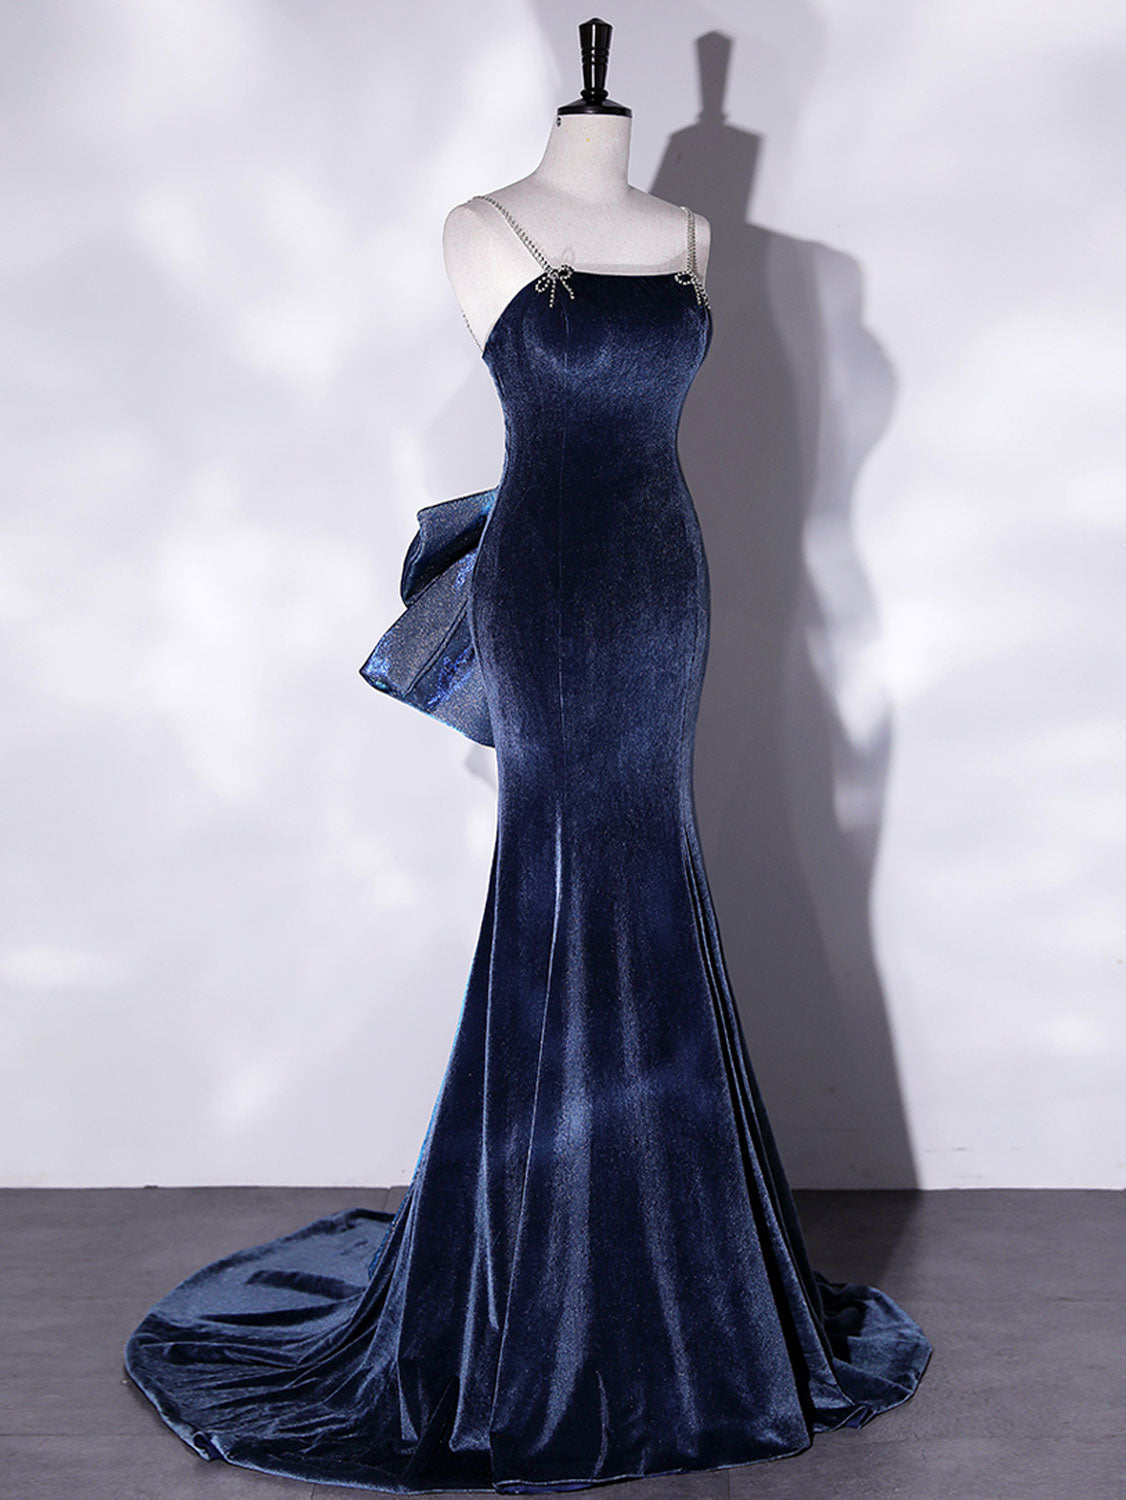 Spaghetti Strap Blue Velvet Mermaid Prom Dress with Big Bow Back